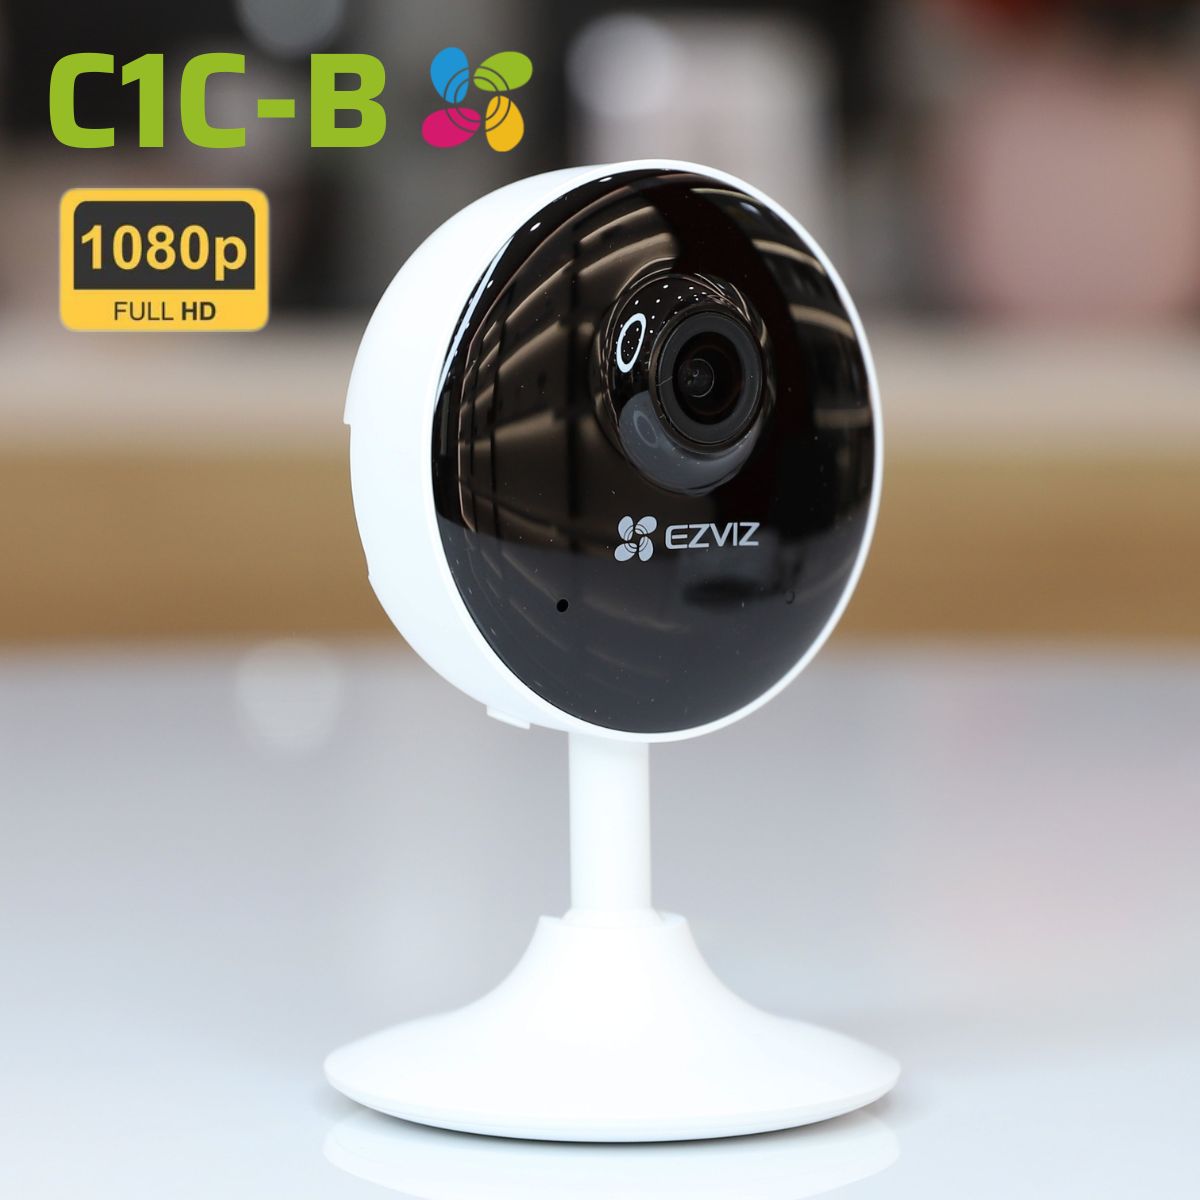 Camera Wifi Ezviz C1C-B 